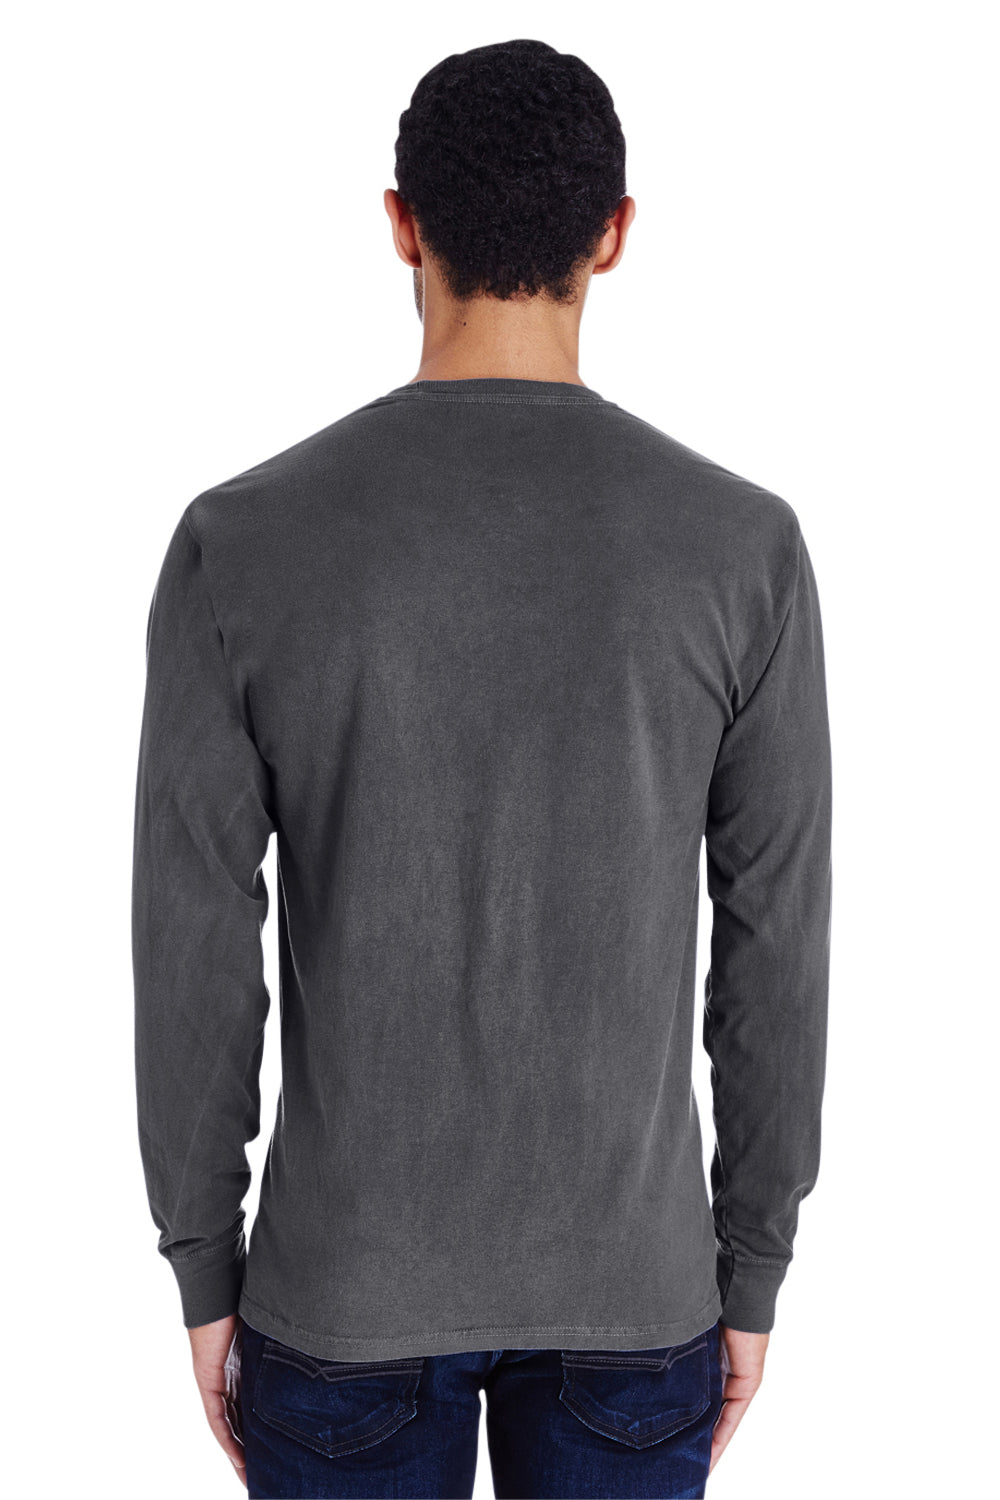 Hanes ComfortWash Garment Dyed Long Sleeve T-Shirt - GDH200 - S